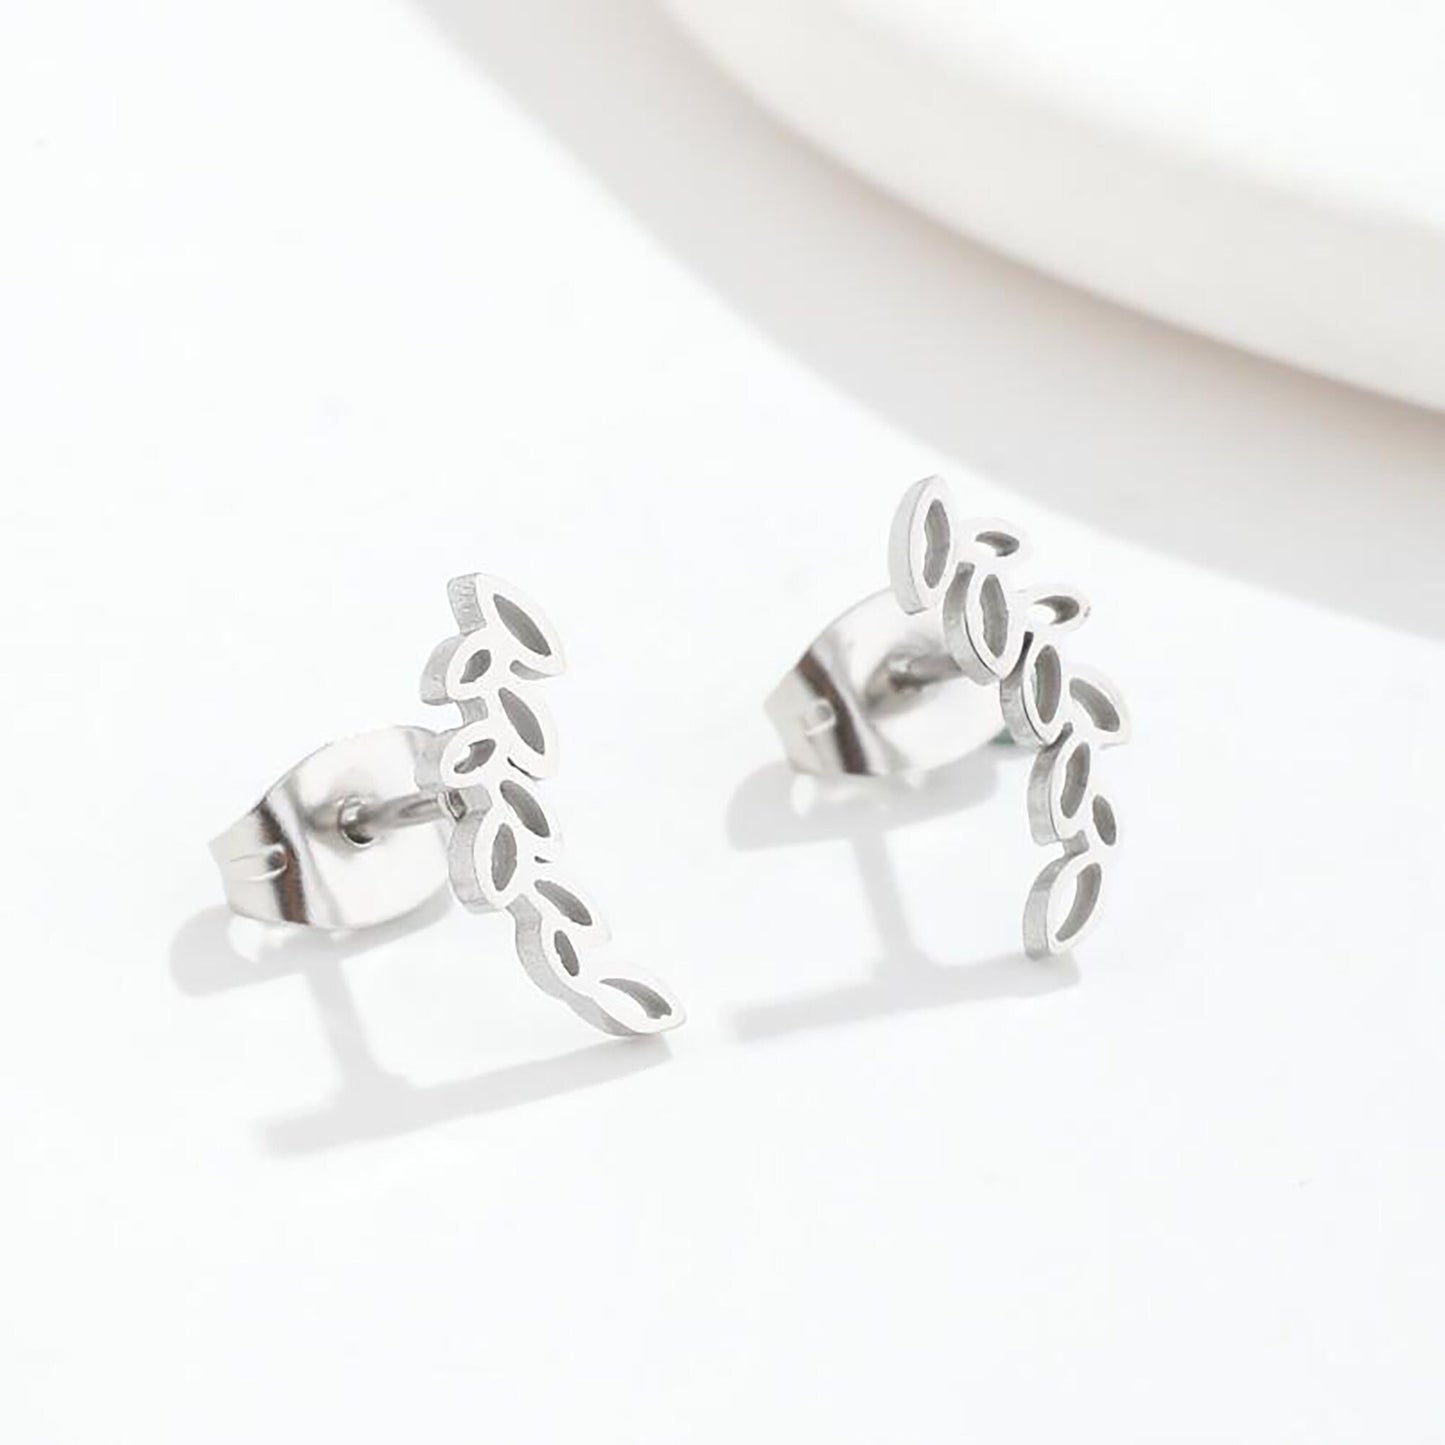 Titanium Leaves Stud Earrings, Non Tarnish, stud earring, Hypoallergenic, Implant Grade Waterproof Earrings, Minimal Earrings